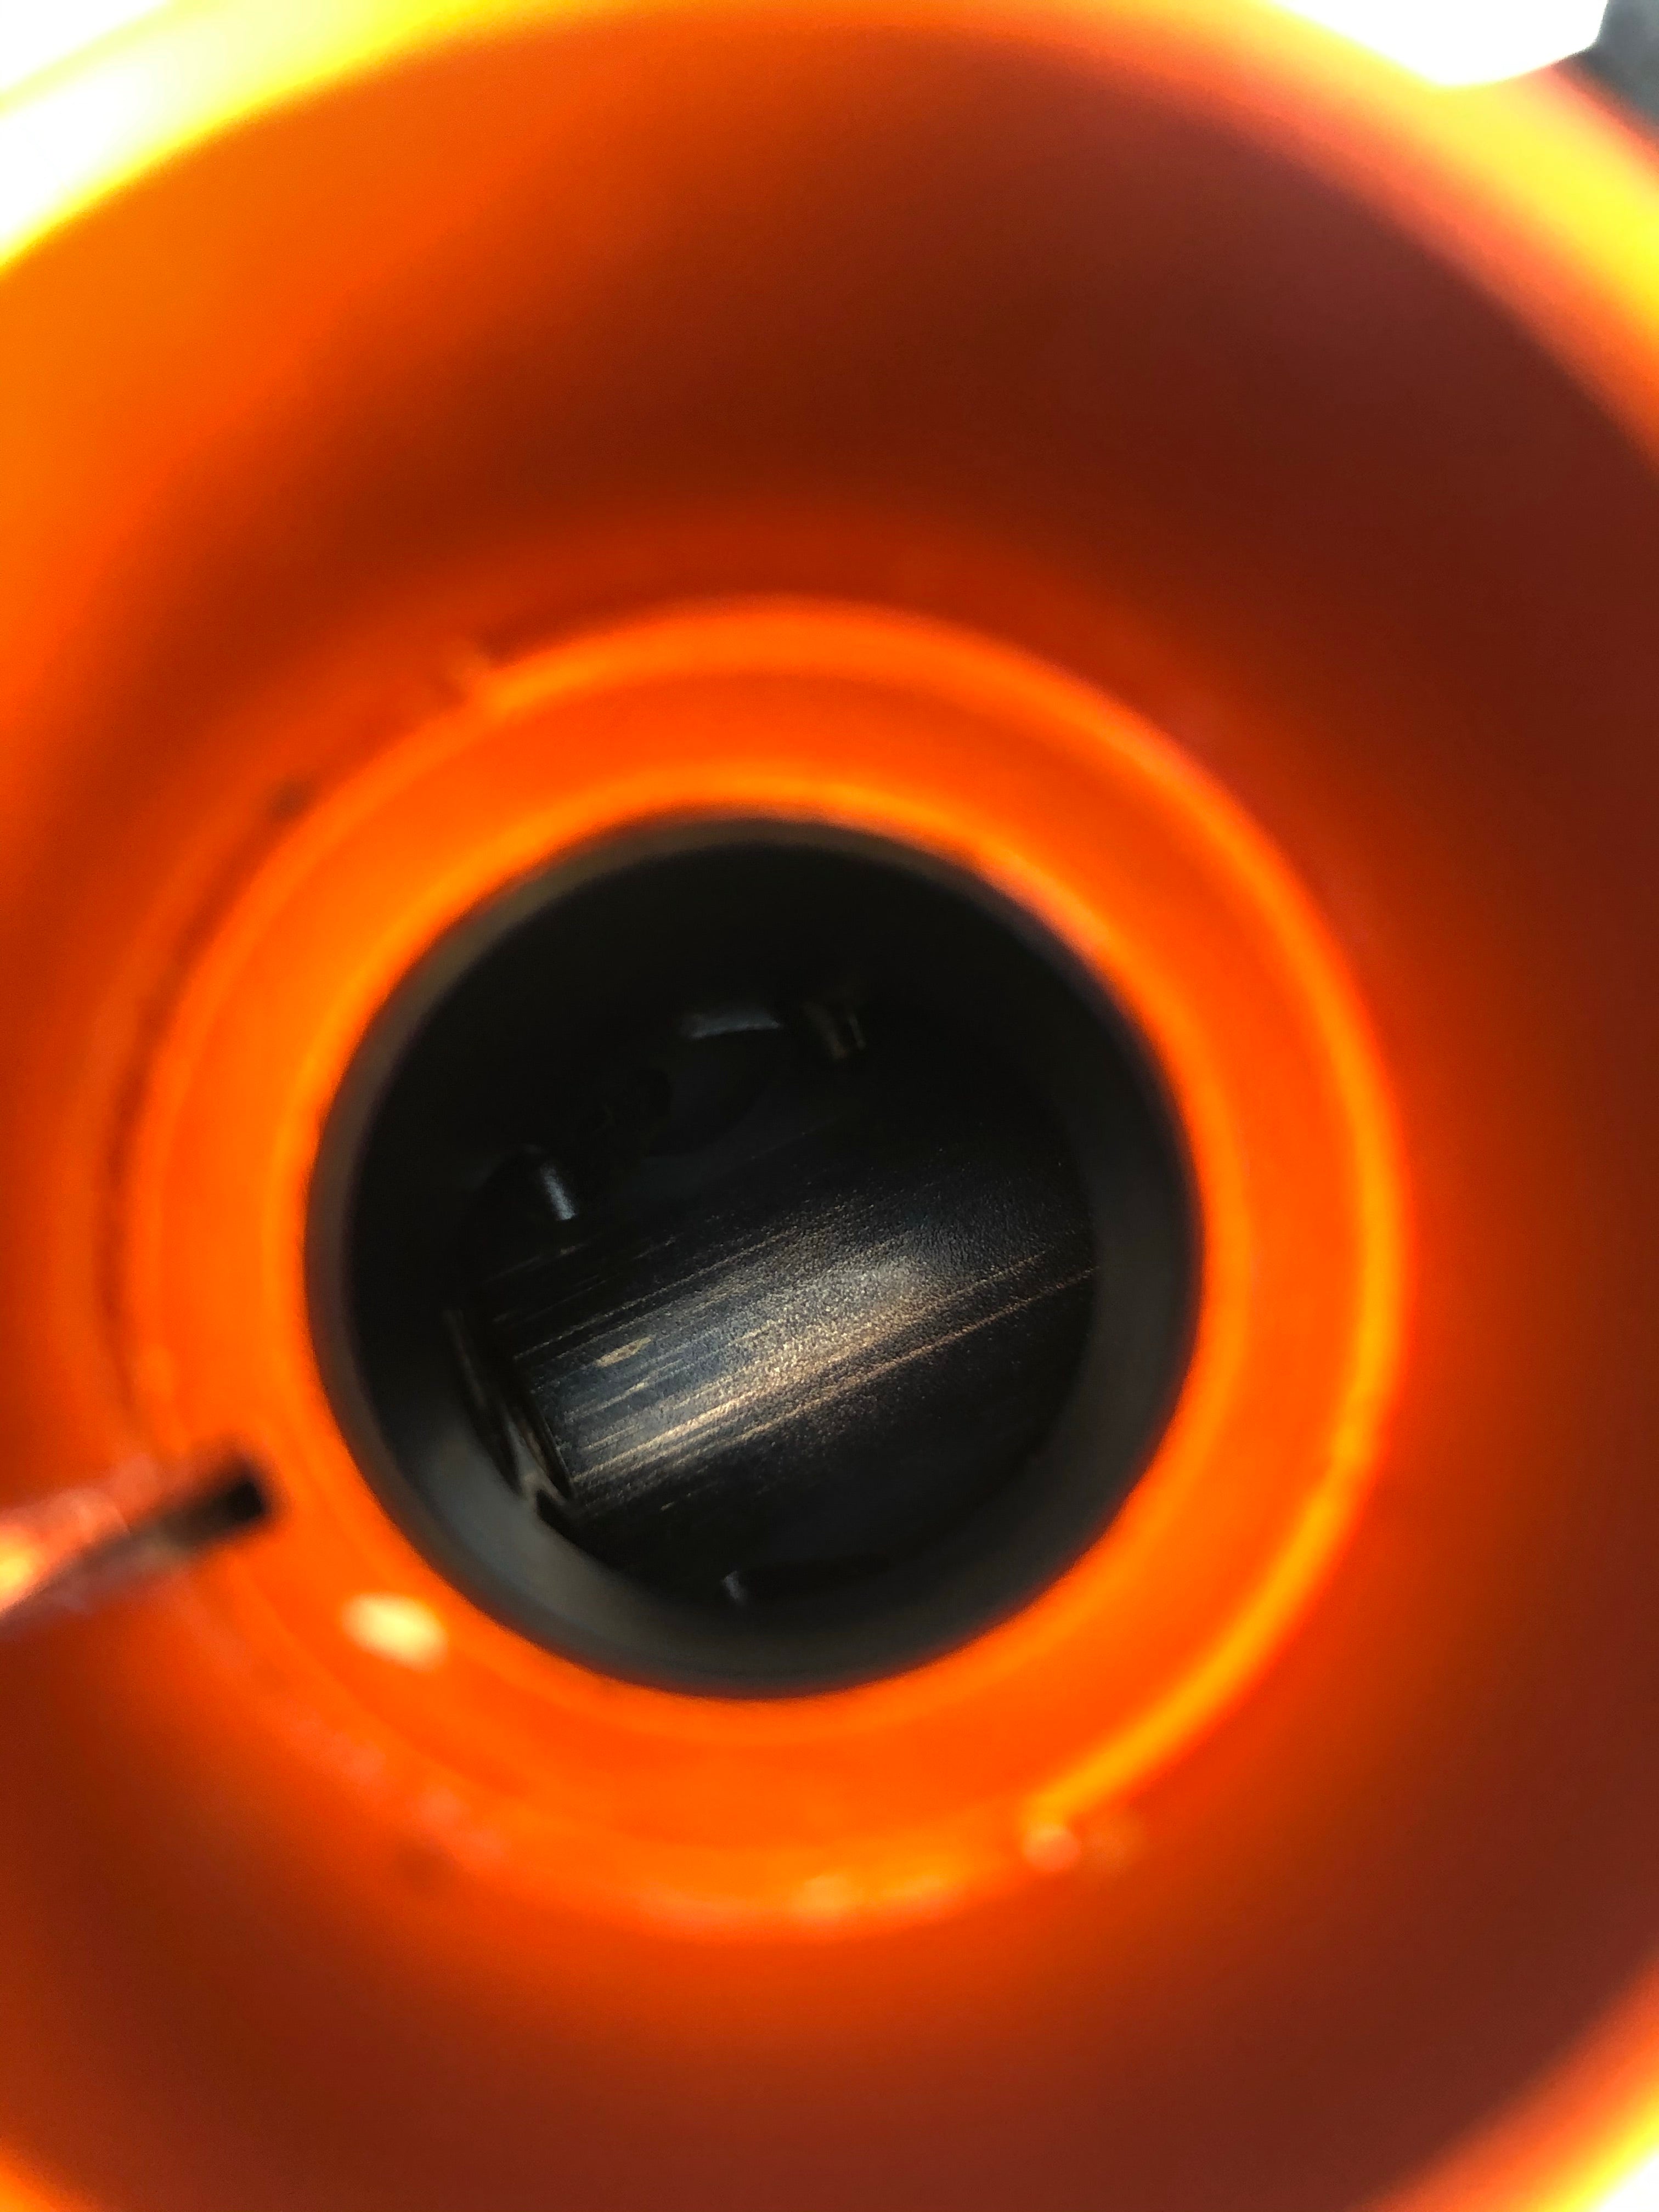 Used Planet Eclipse LV1.1 Paintball Gun - Blue/Orange – Punishers Paintball